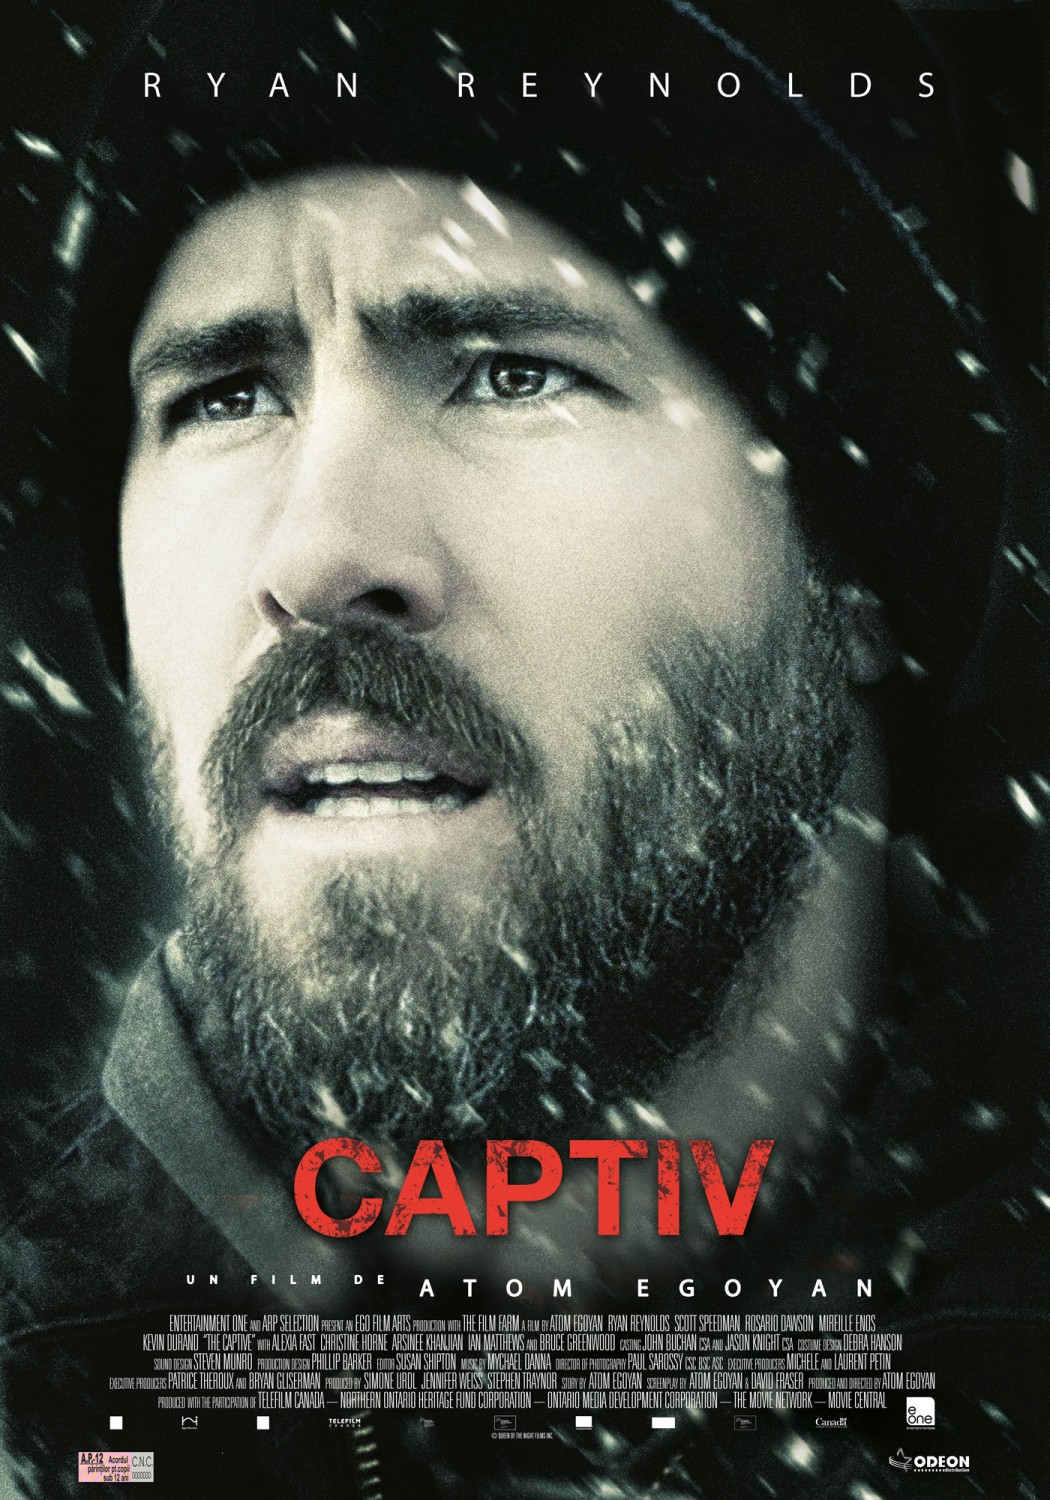 The Captive - Captiv (2014) online subtitrat